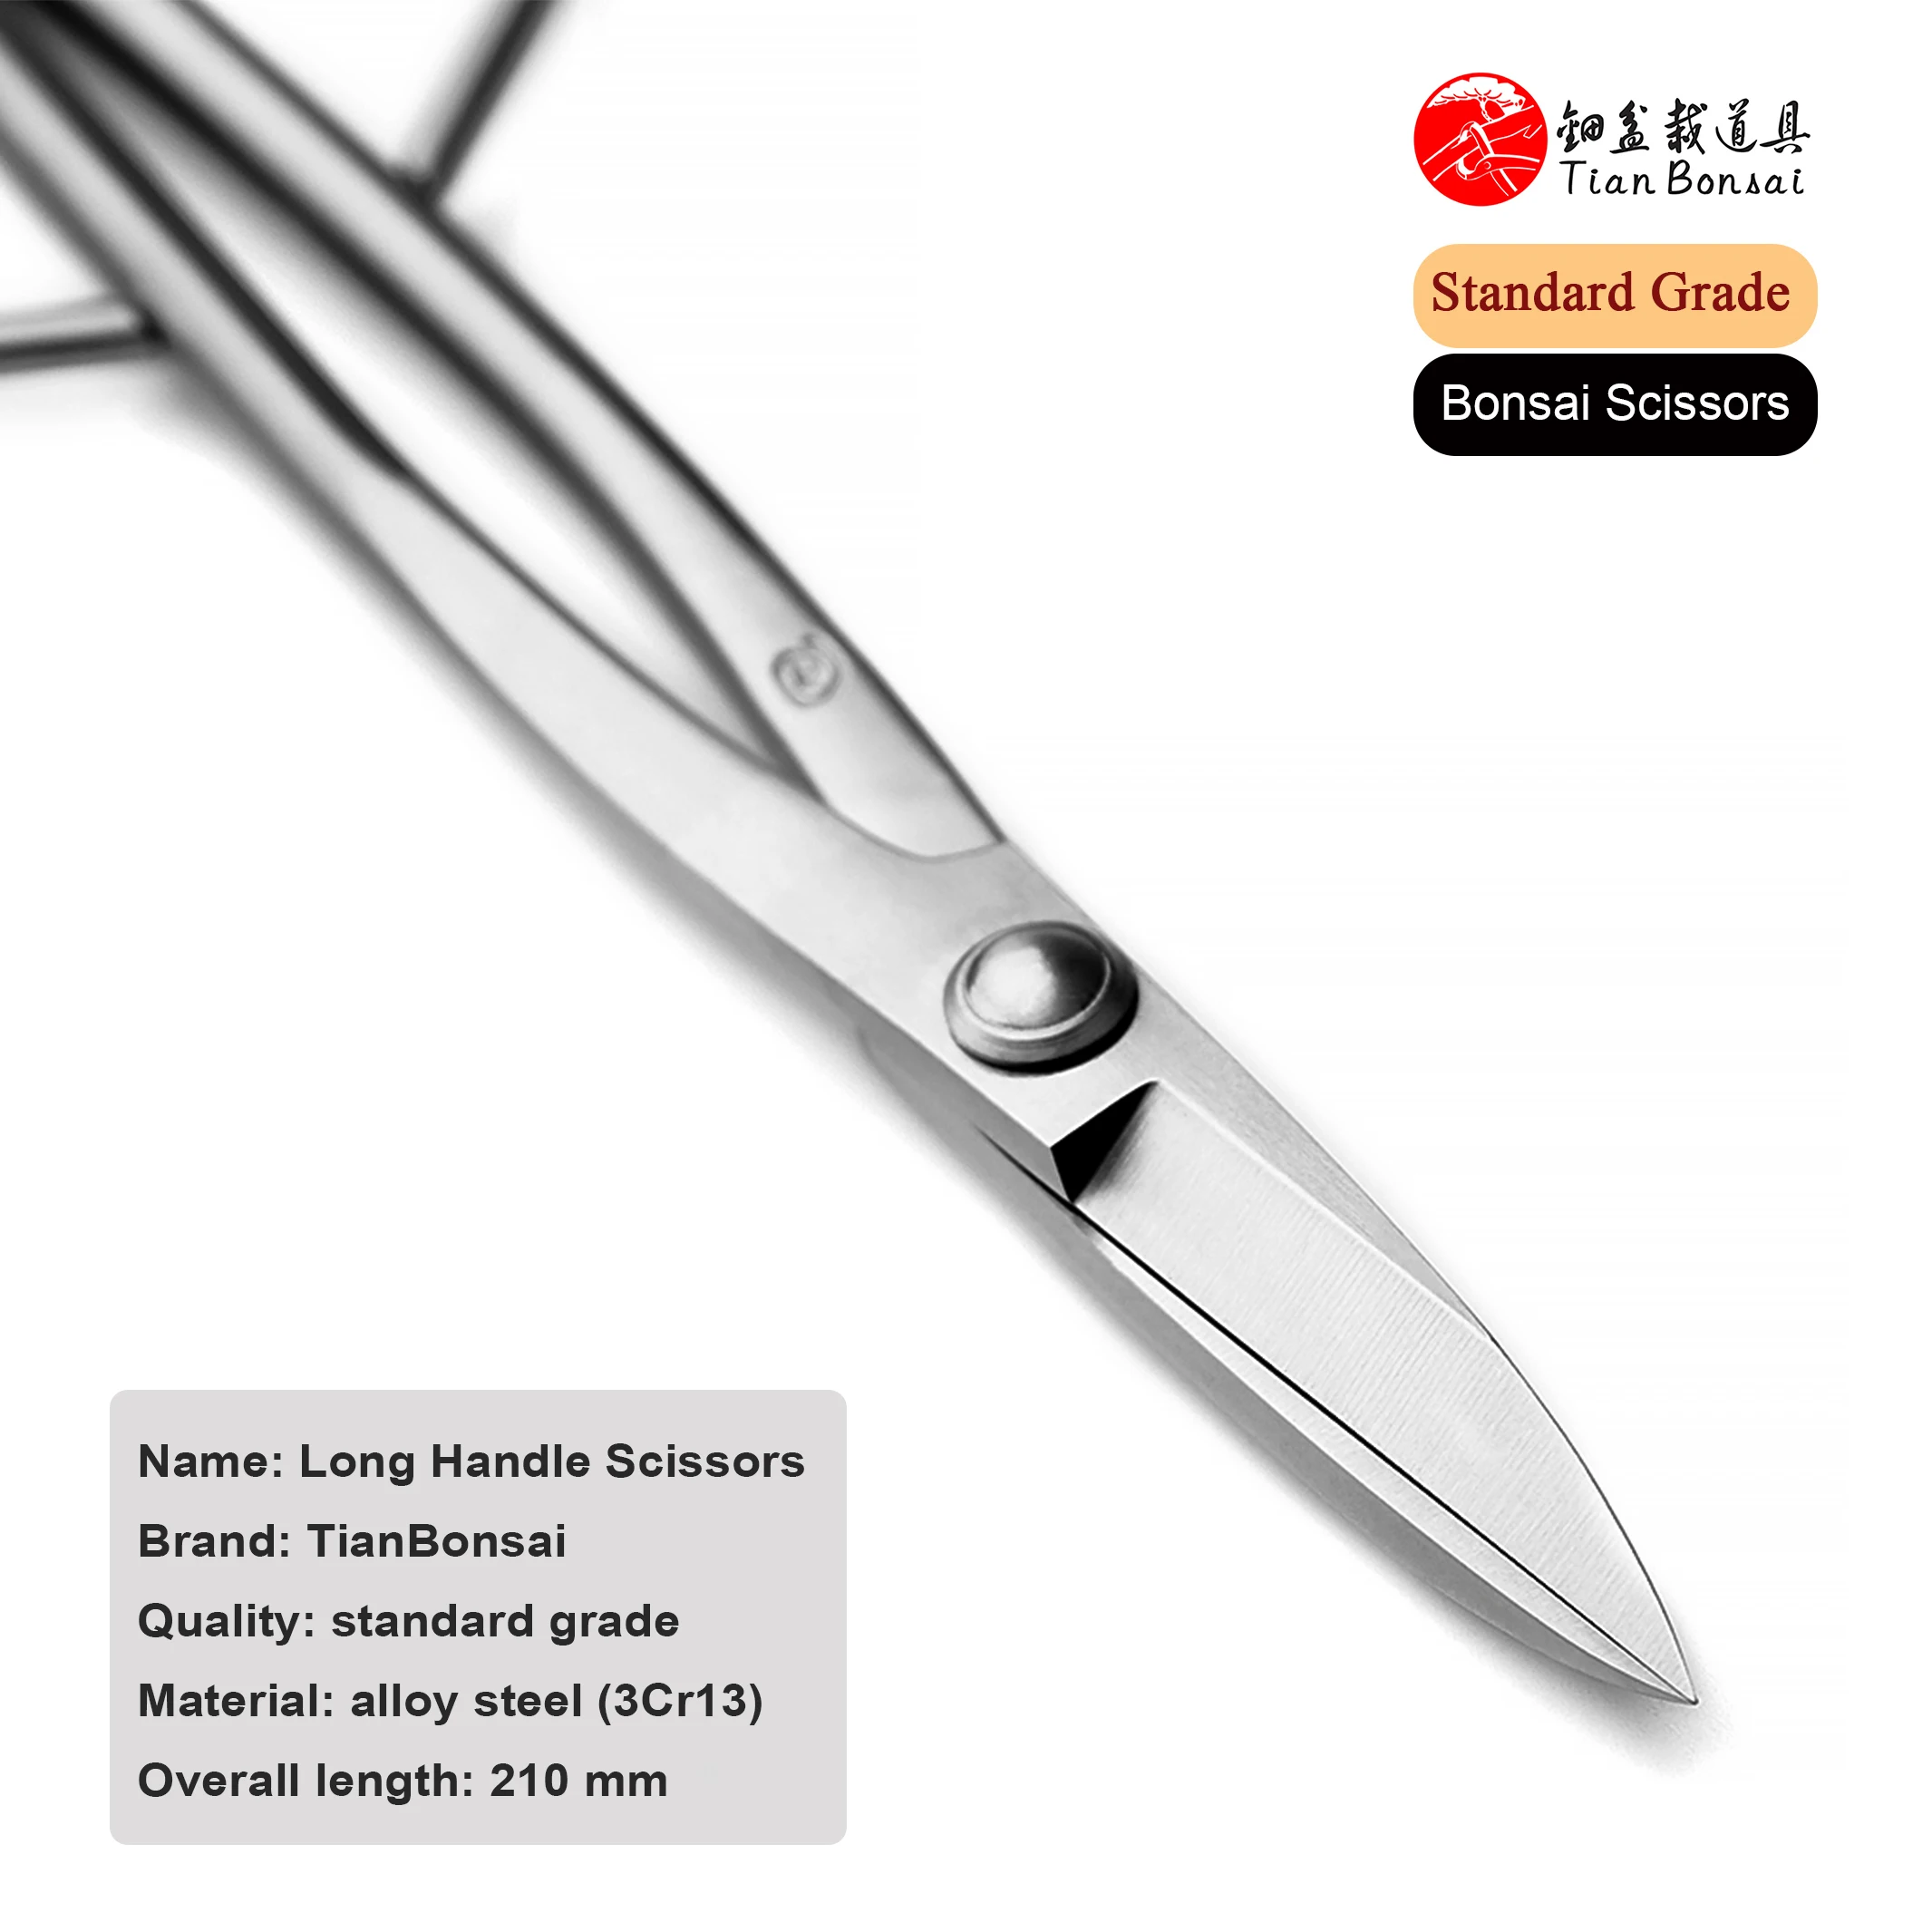 Standard Grade 210 mm Long Handle Bonsai Scissors 3Cr13 Alloy Steel Bonsai Tools